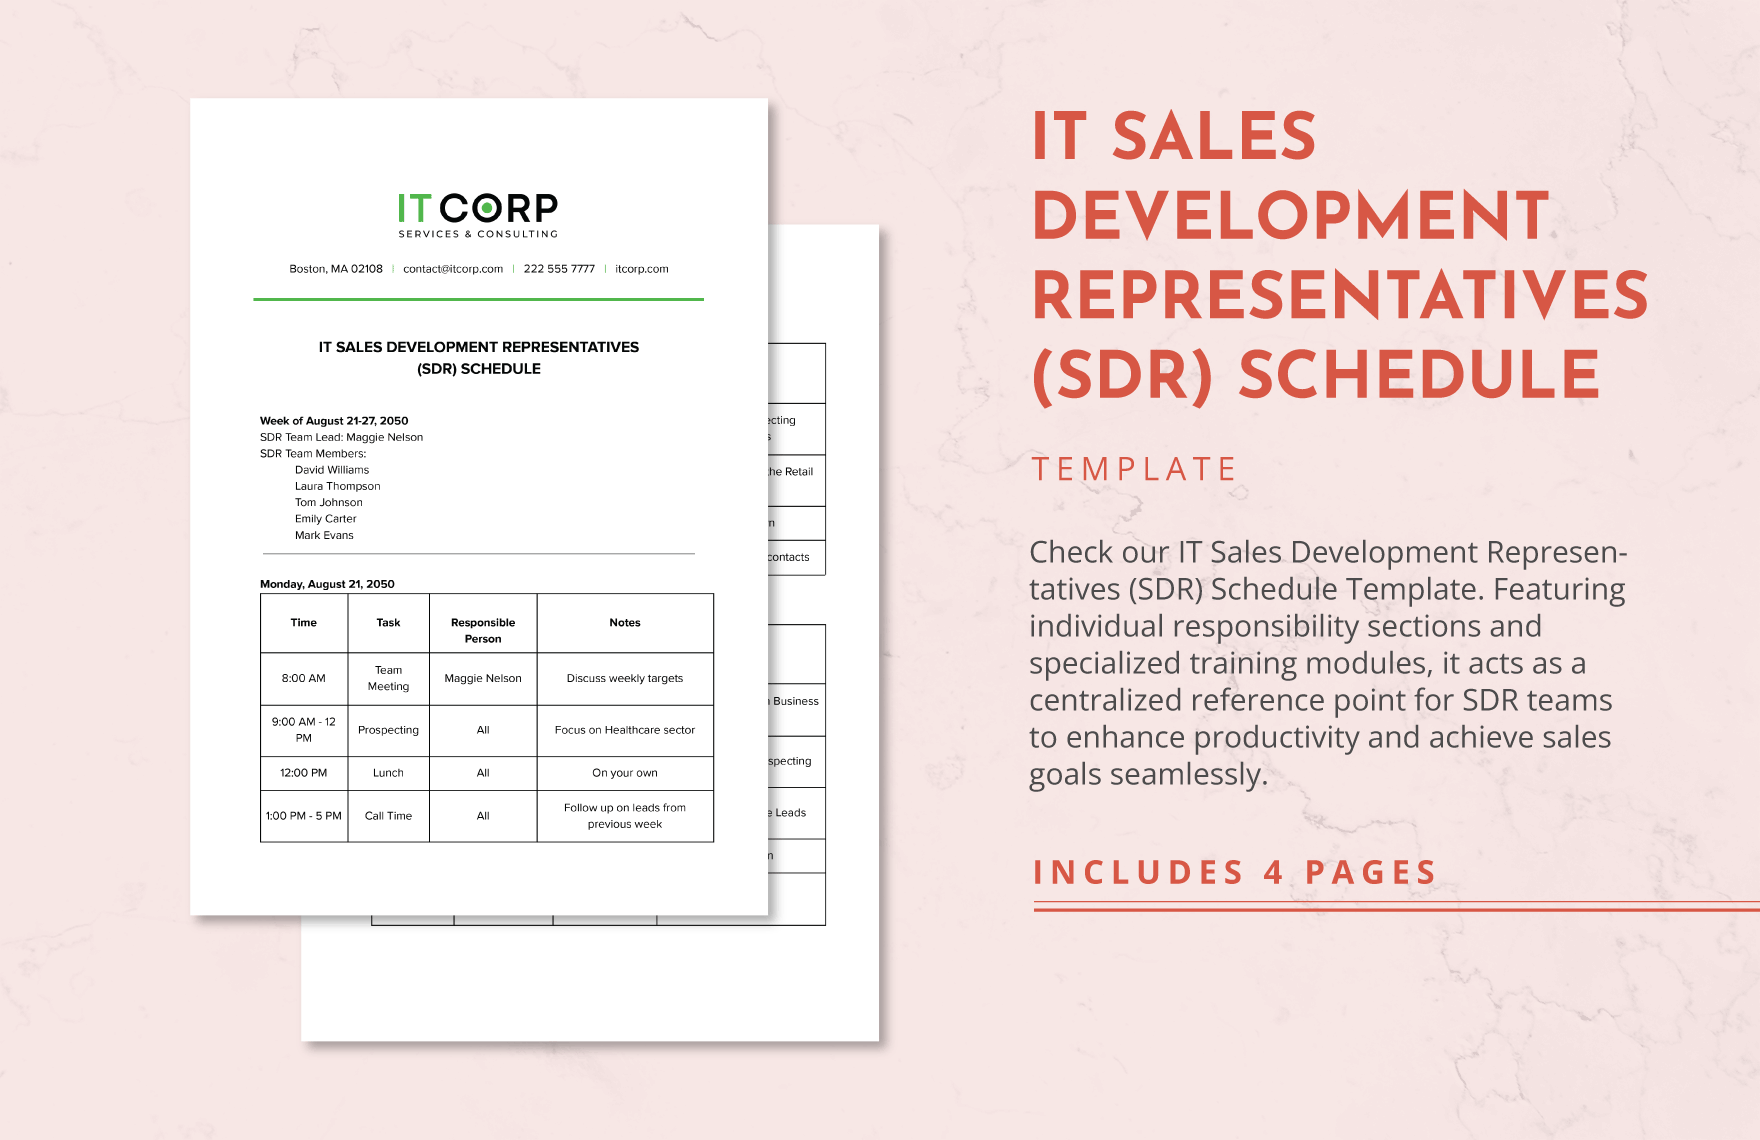 IT Sales Development Representatives (SDR) Schedule Template